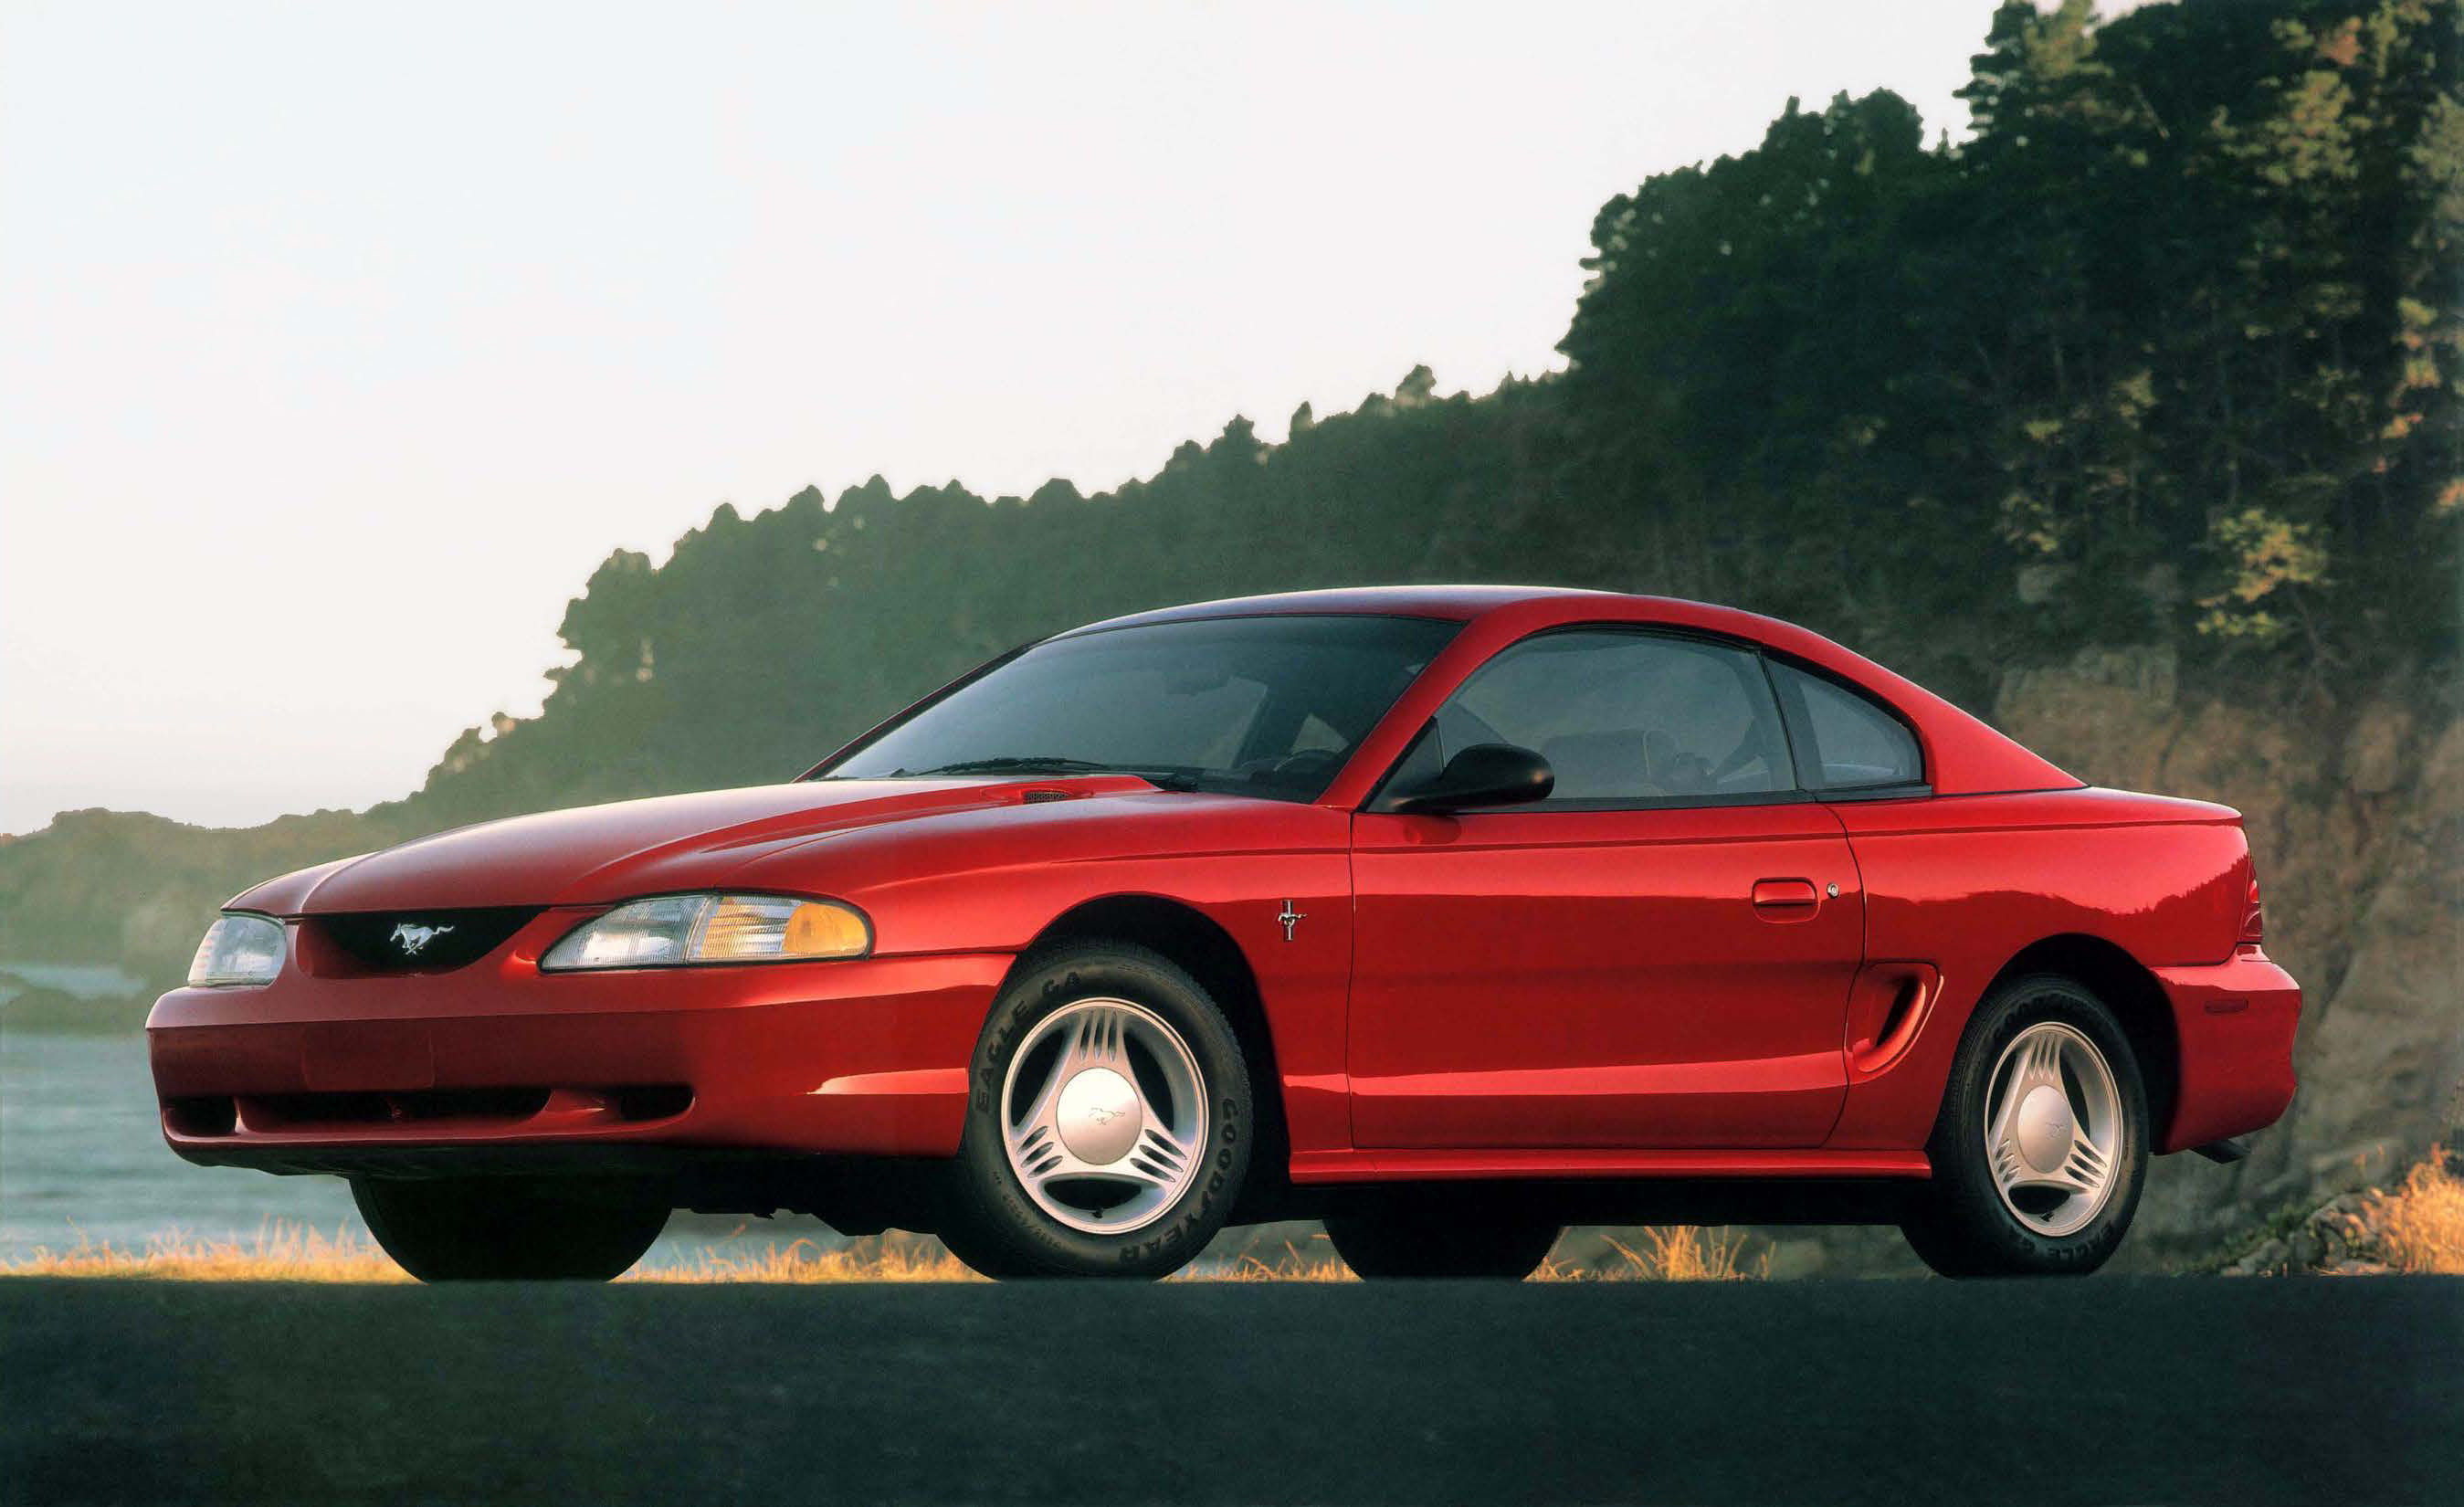 1994_Ford_Mustang_Rev-03-04